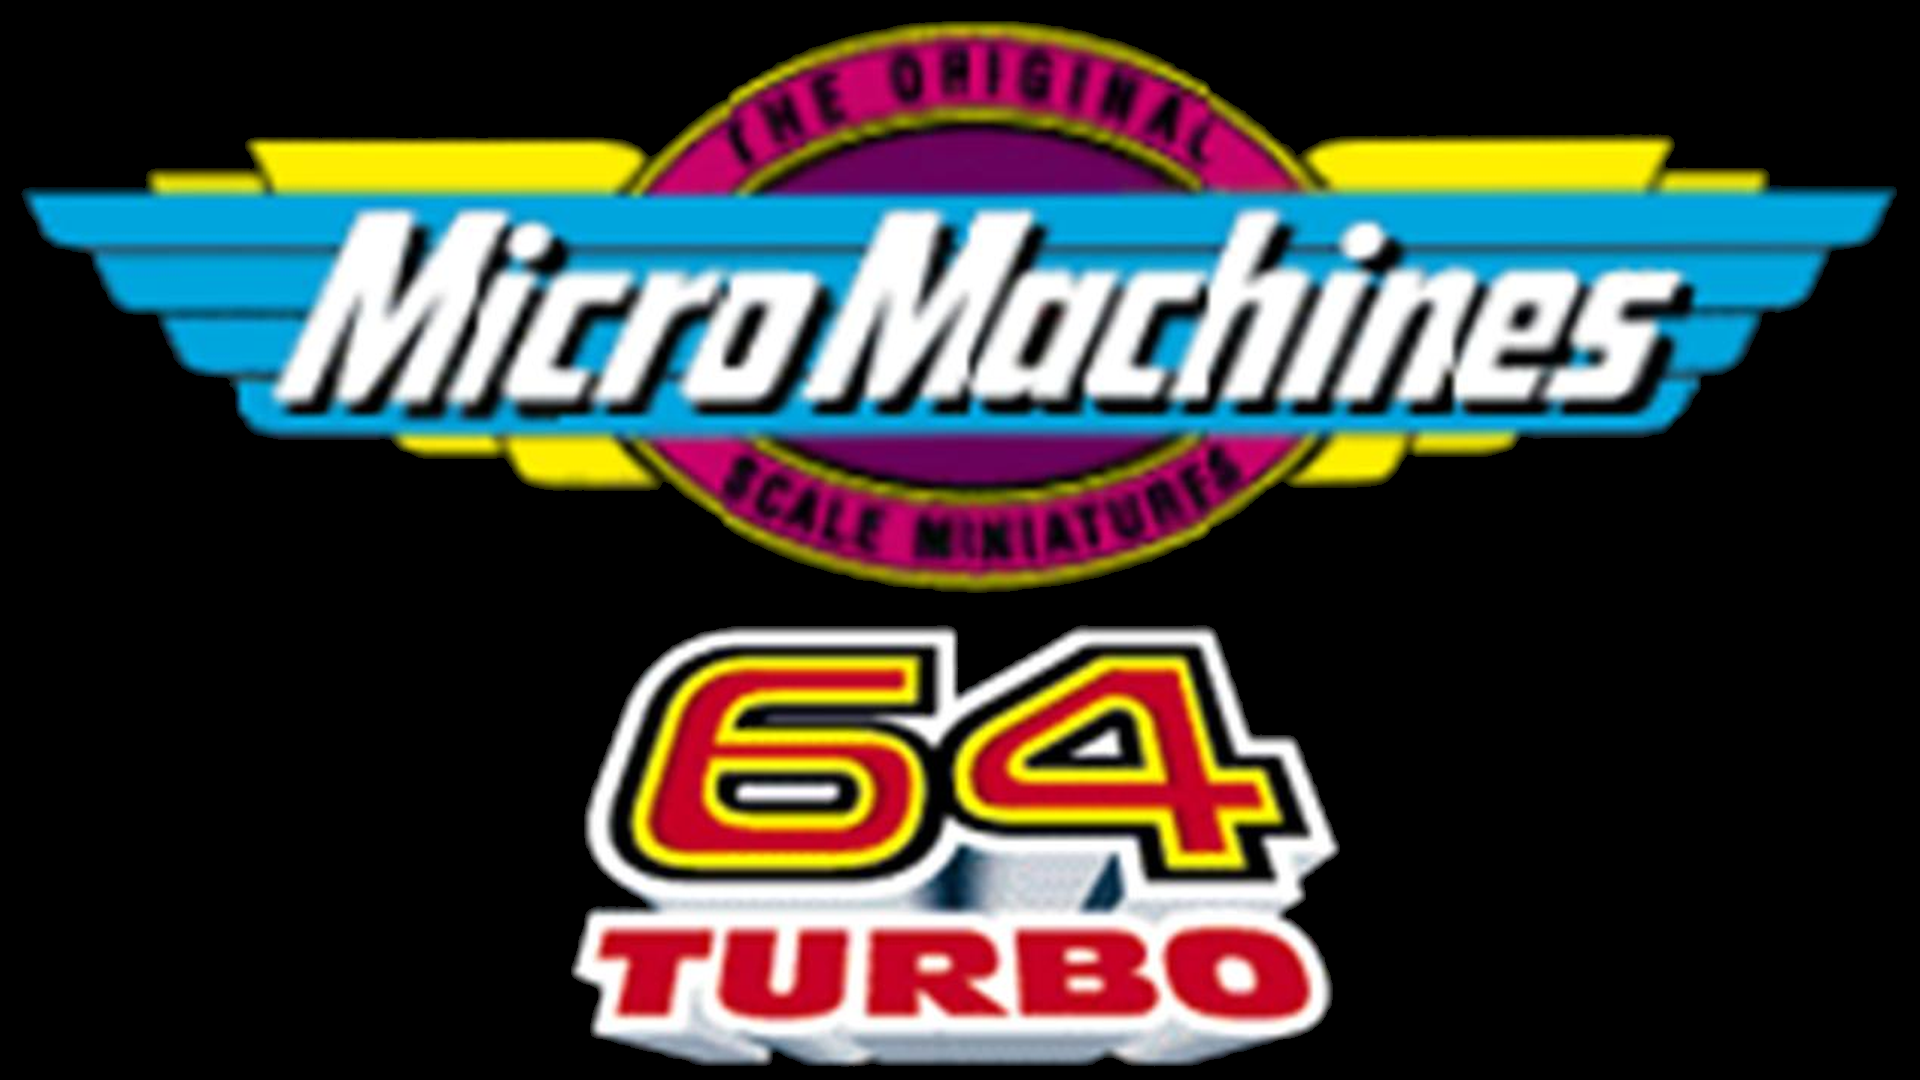 Micro Machines 64 Turbo Logo